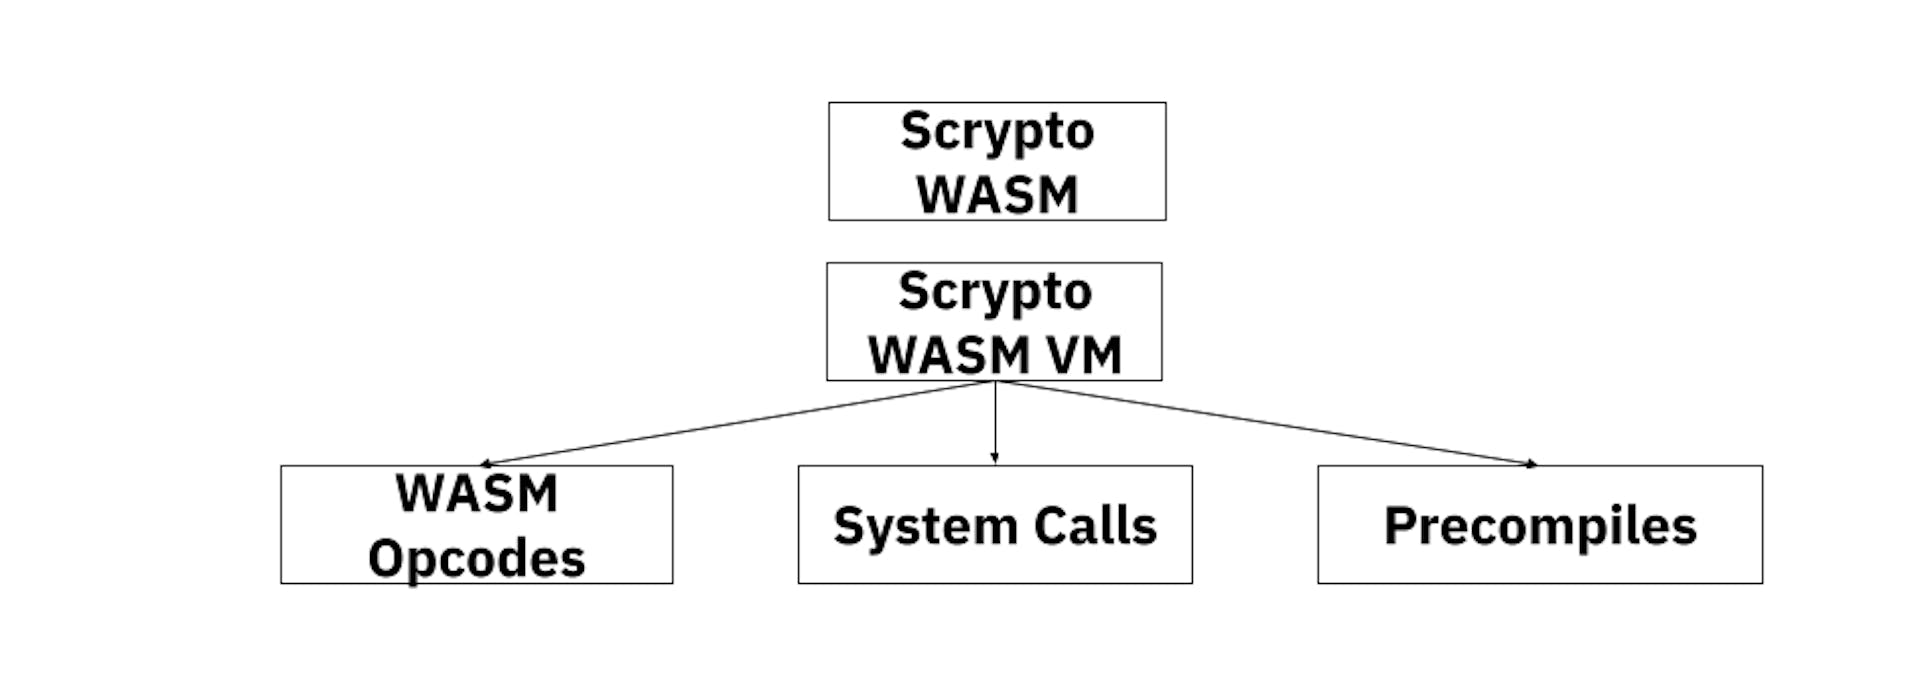 Scrypto WASM VM 模型